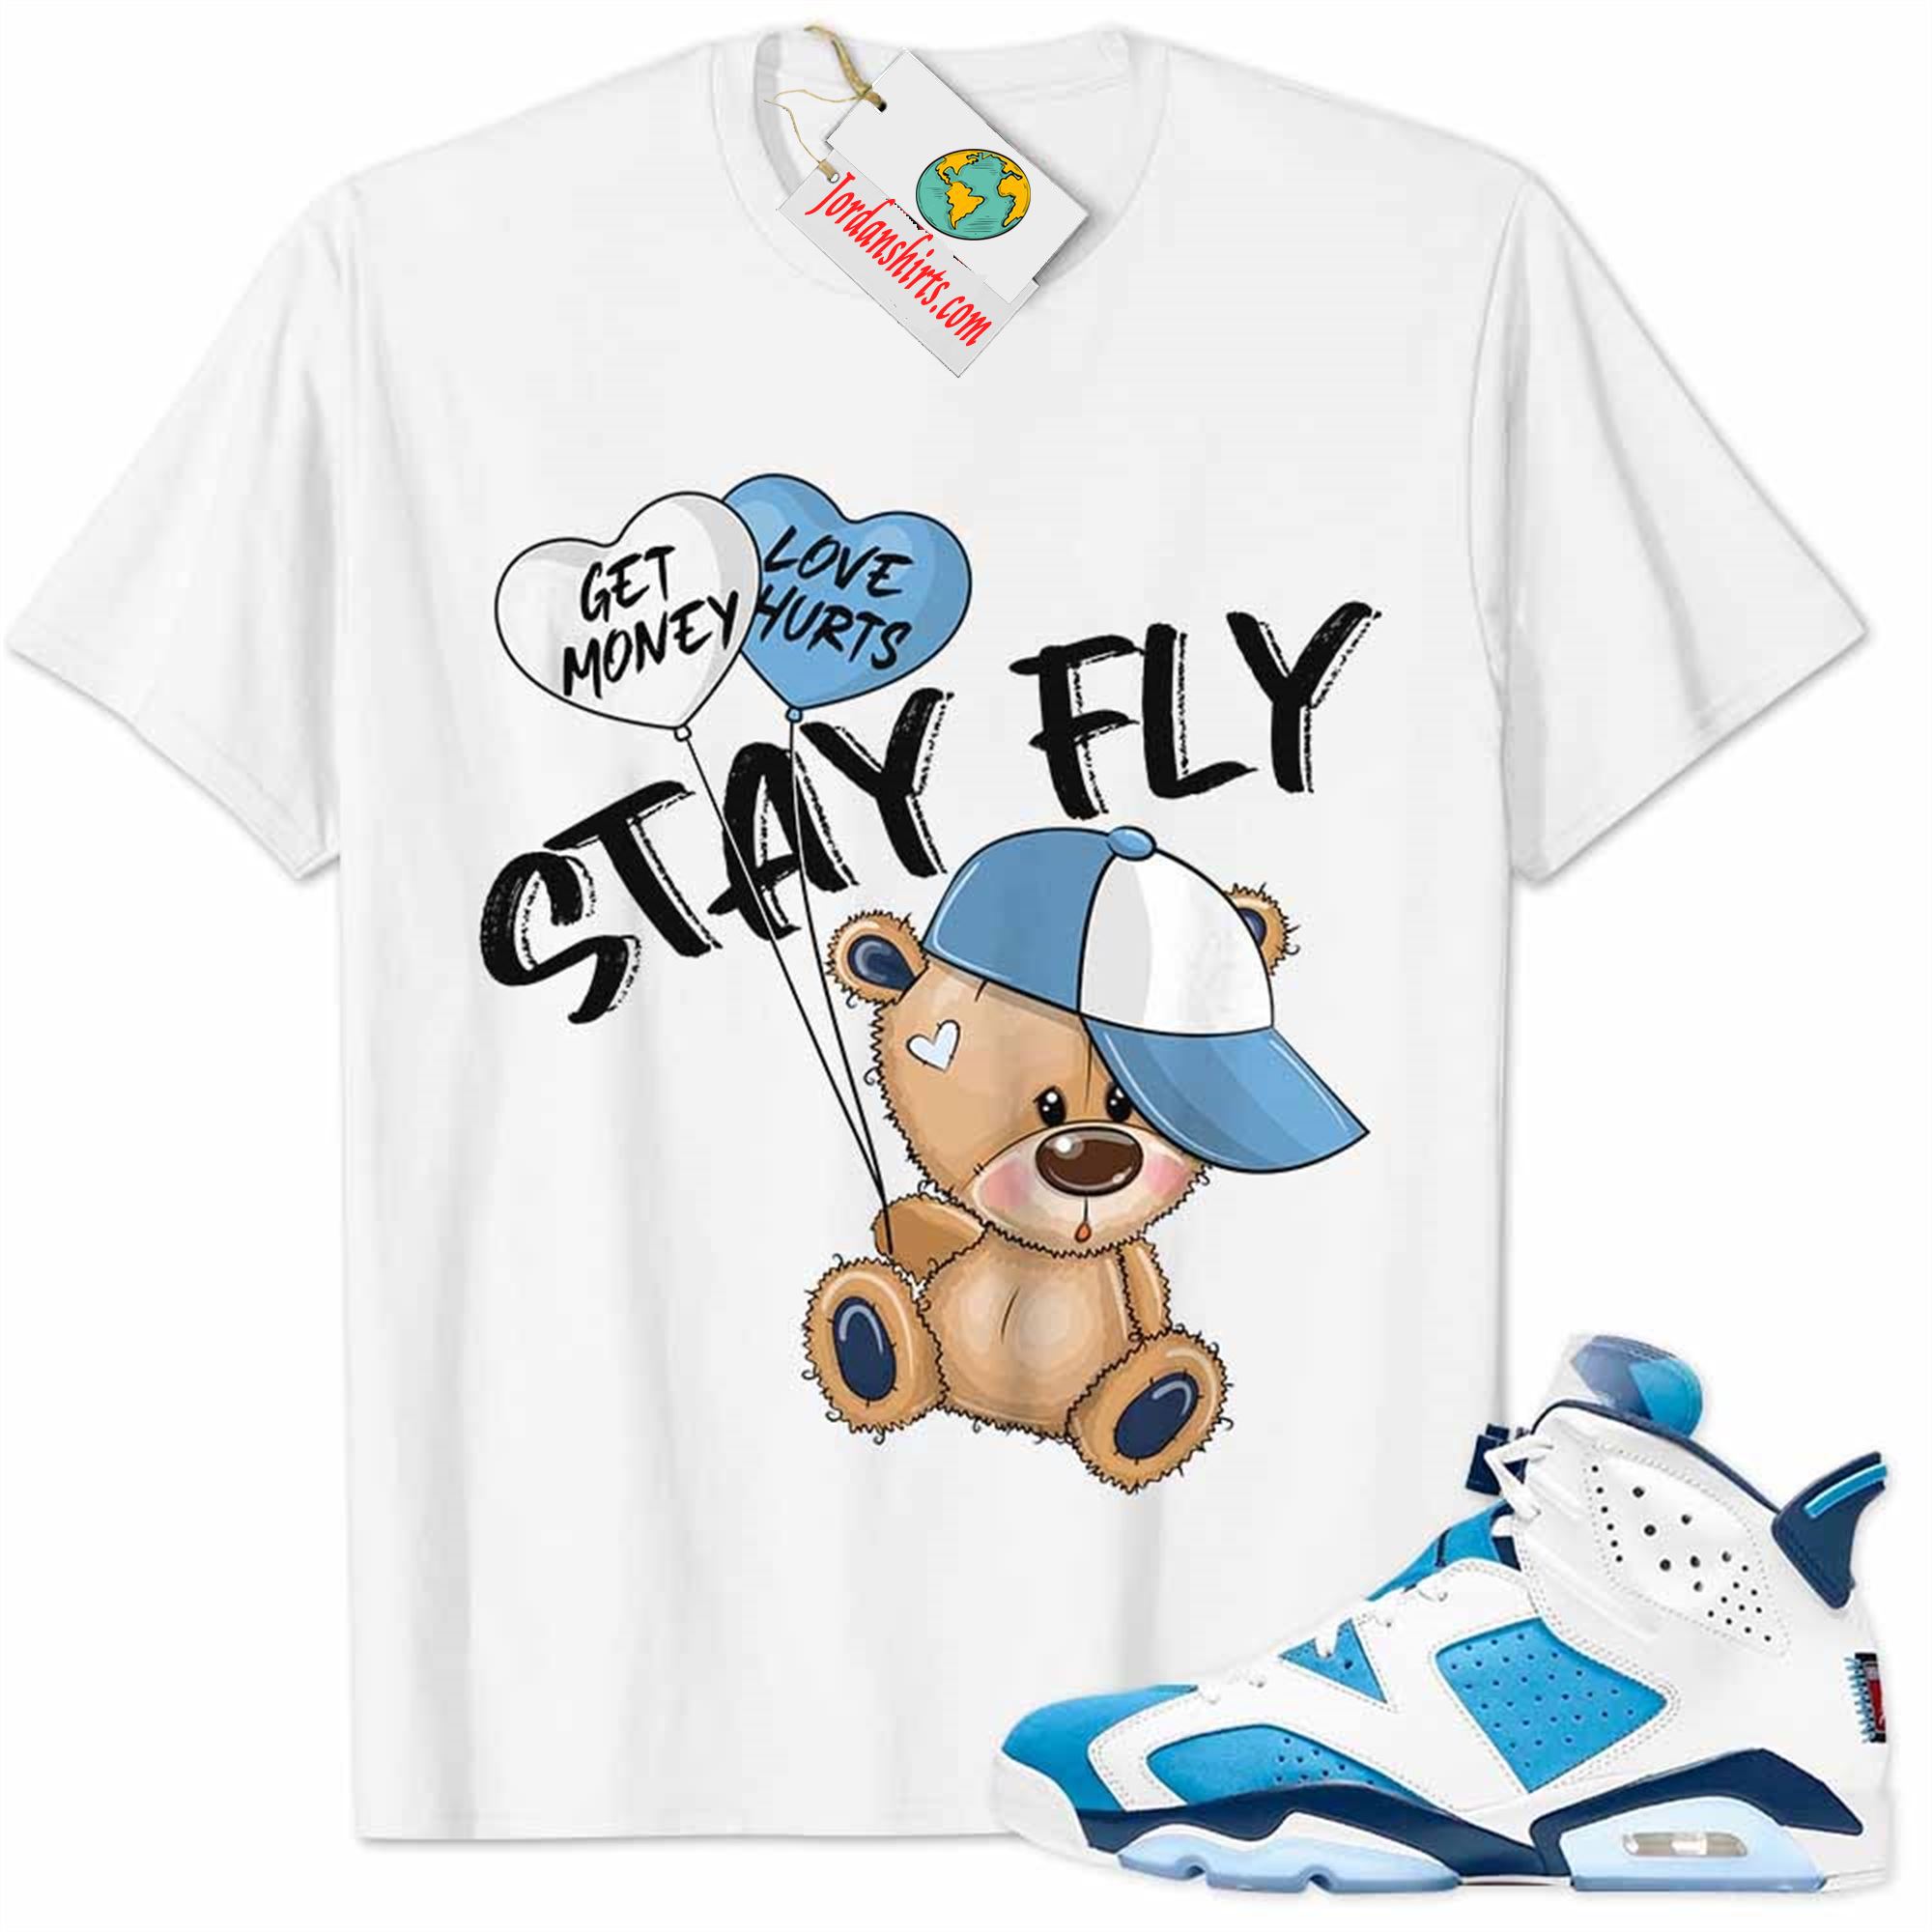 Jordan 6 Shirt, Unc 6s Shirt Cute Teddy Bear Stay Fly Get Money White Size Up To 5xl